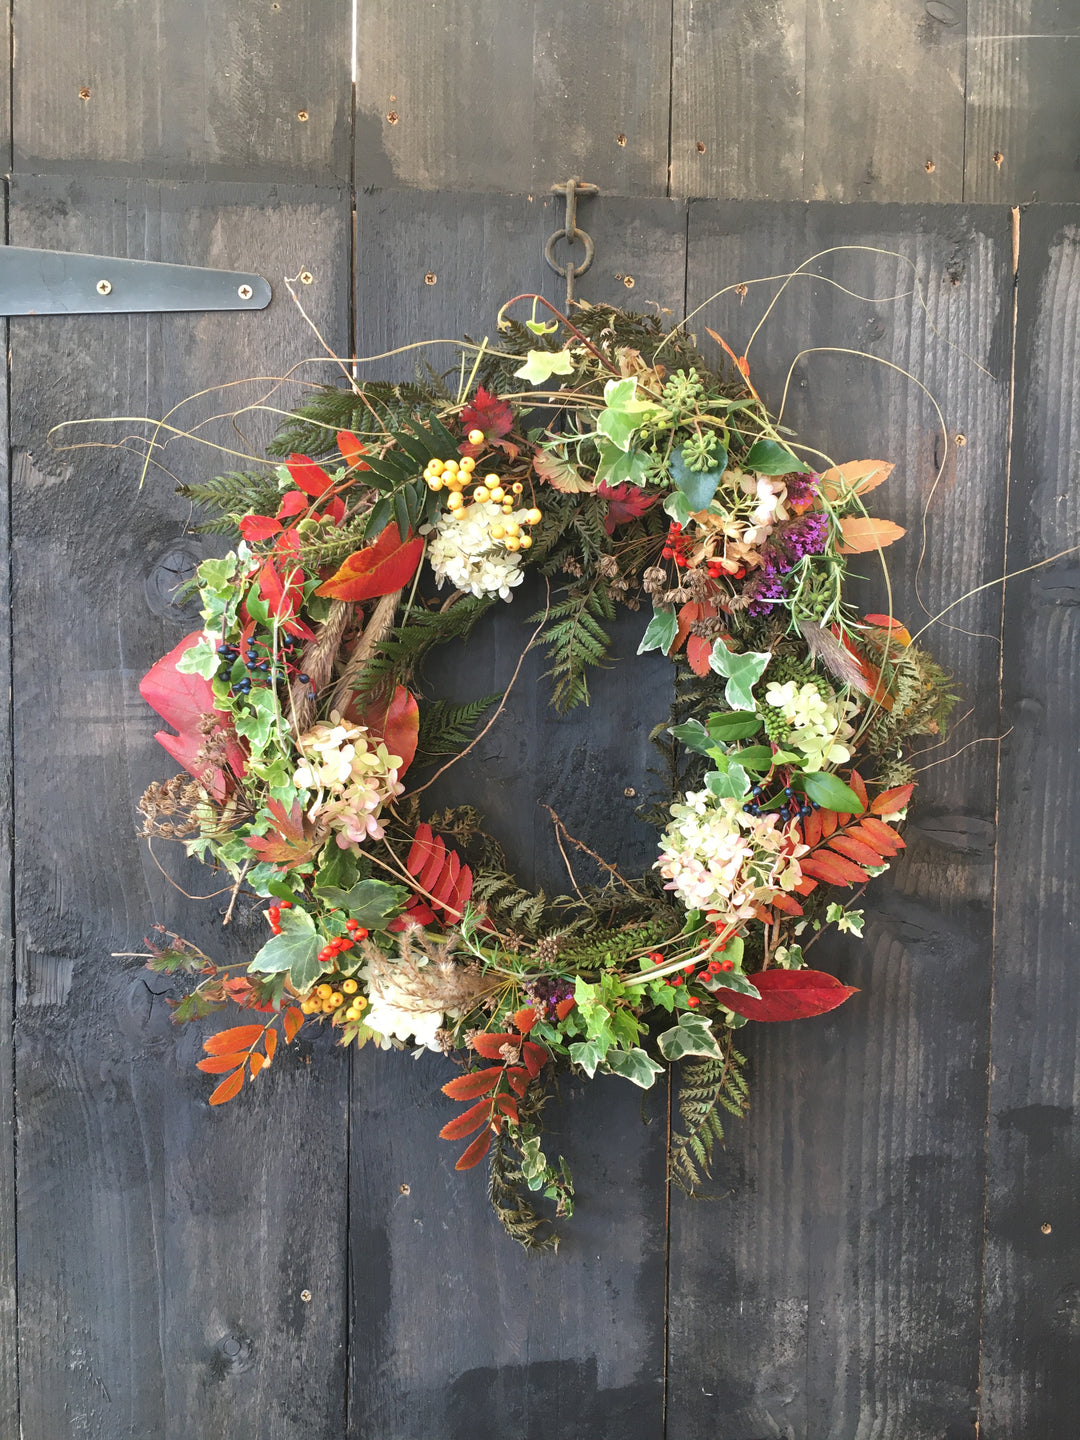 Celebrate the season's bounty with an Autumn Wreath